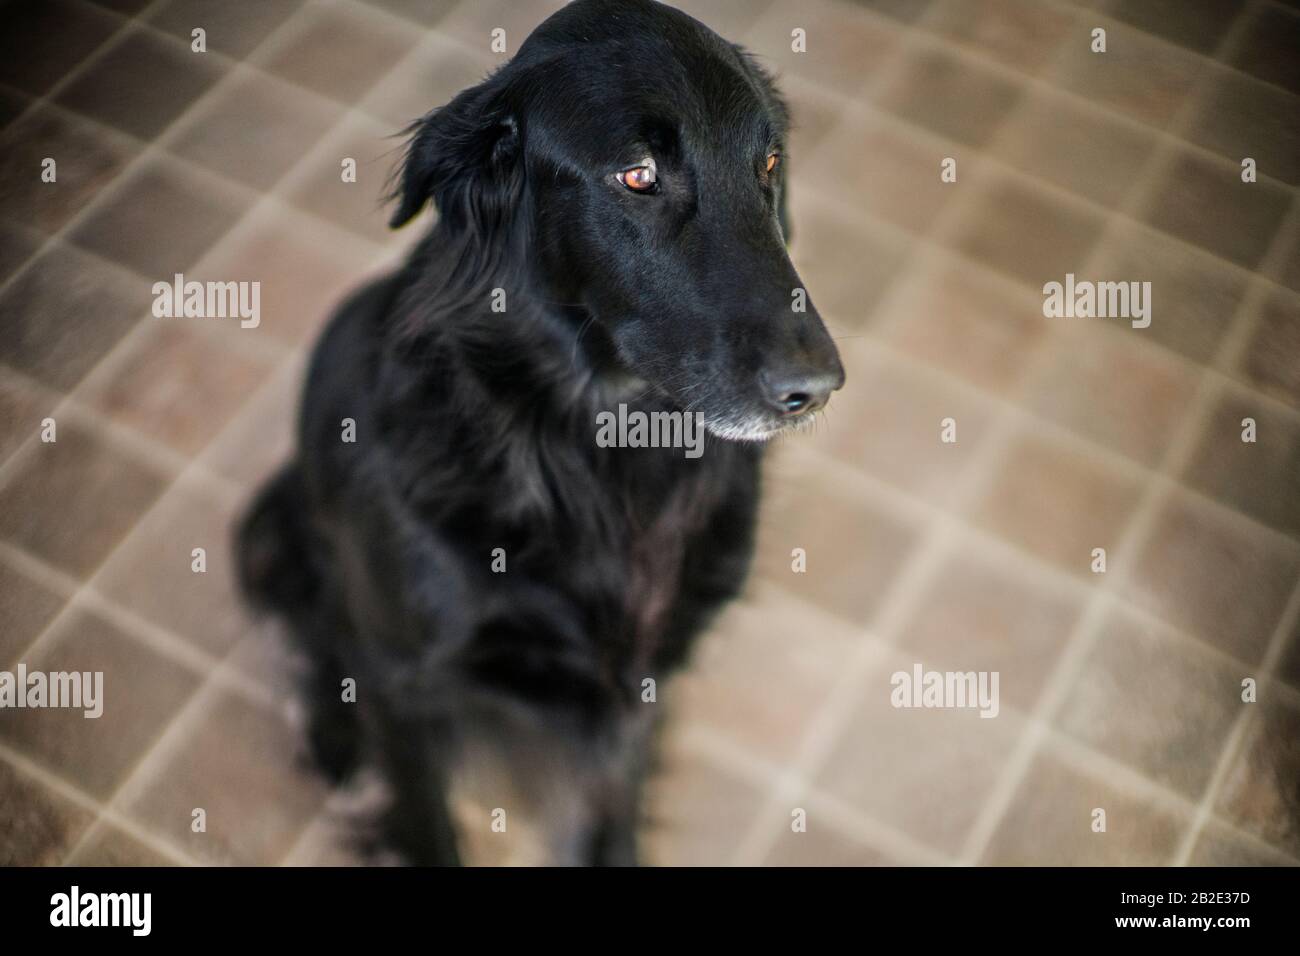 Black dog sitting on a kitchen floor Stock Photo